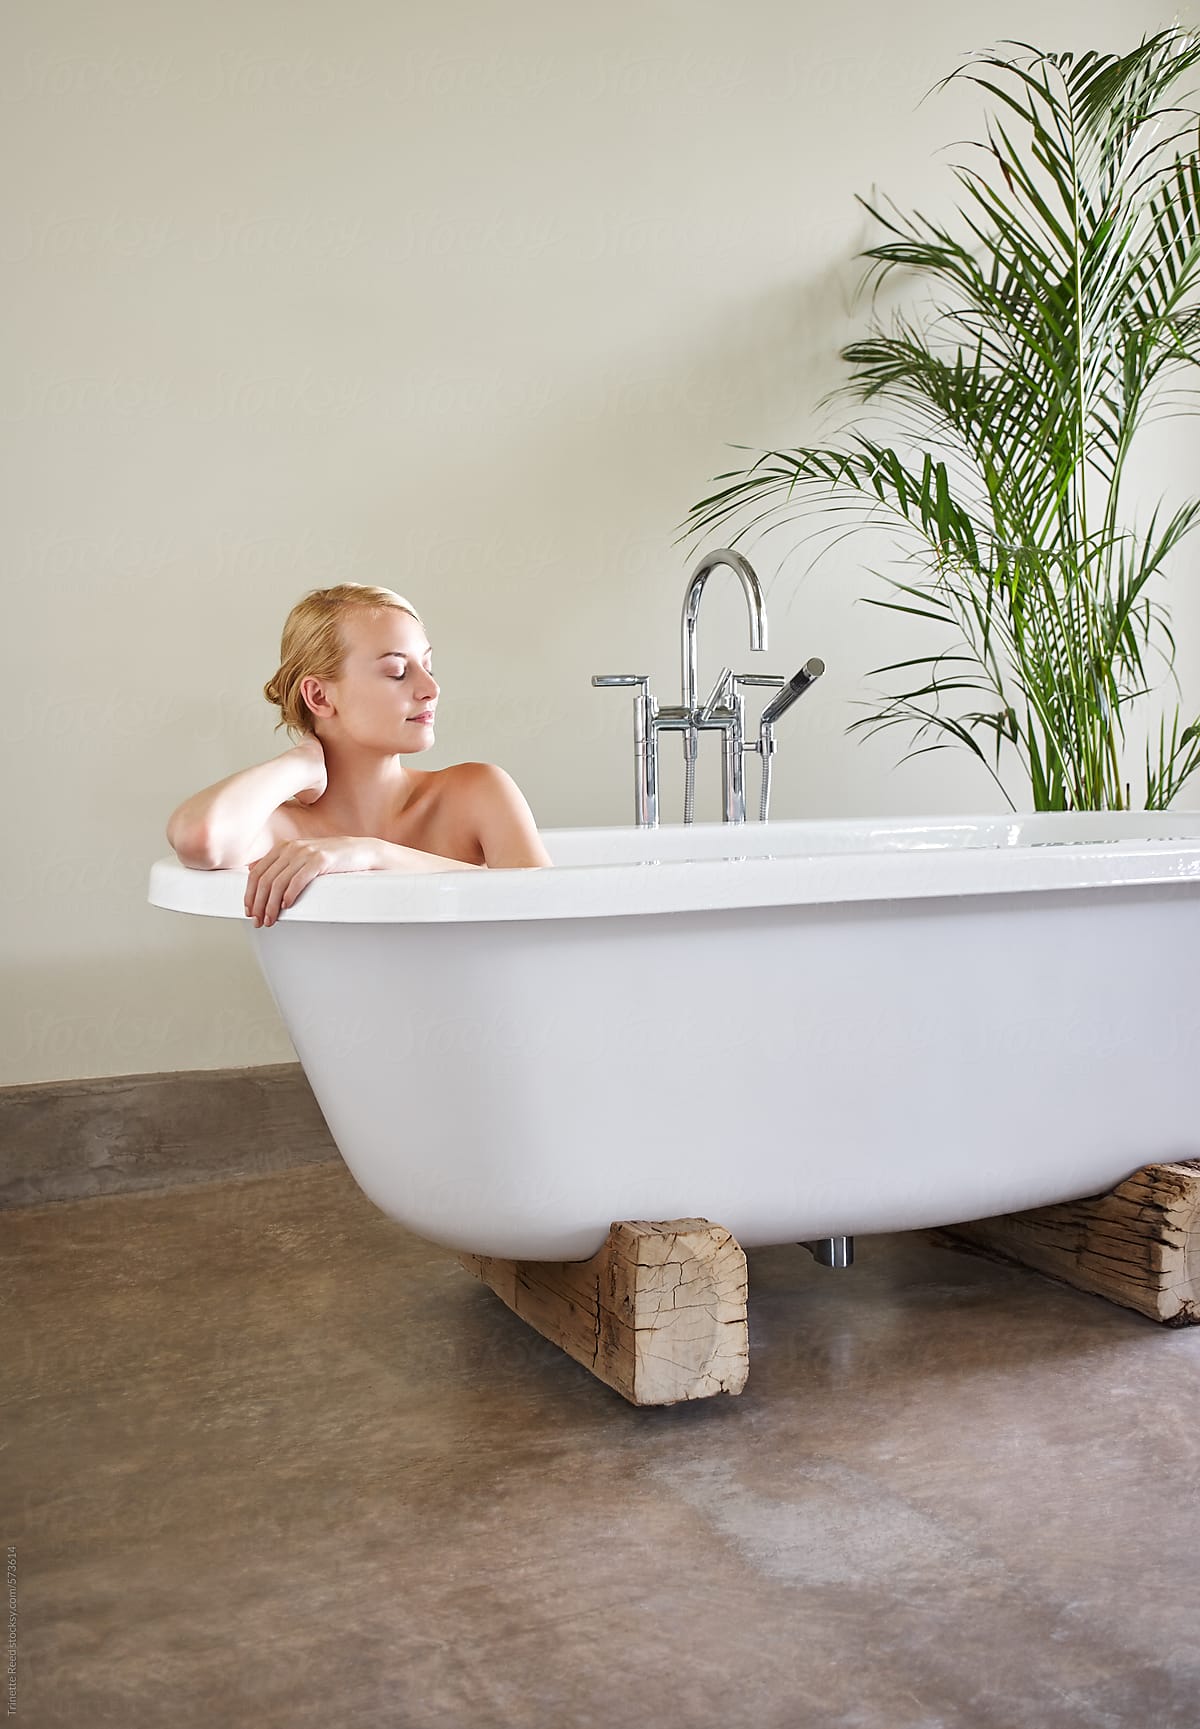 Woman Taking A Bath In Luxury Bathroom by Stocksy Contributor Trinette  Reed - Stocksy